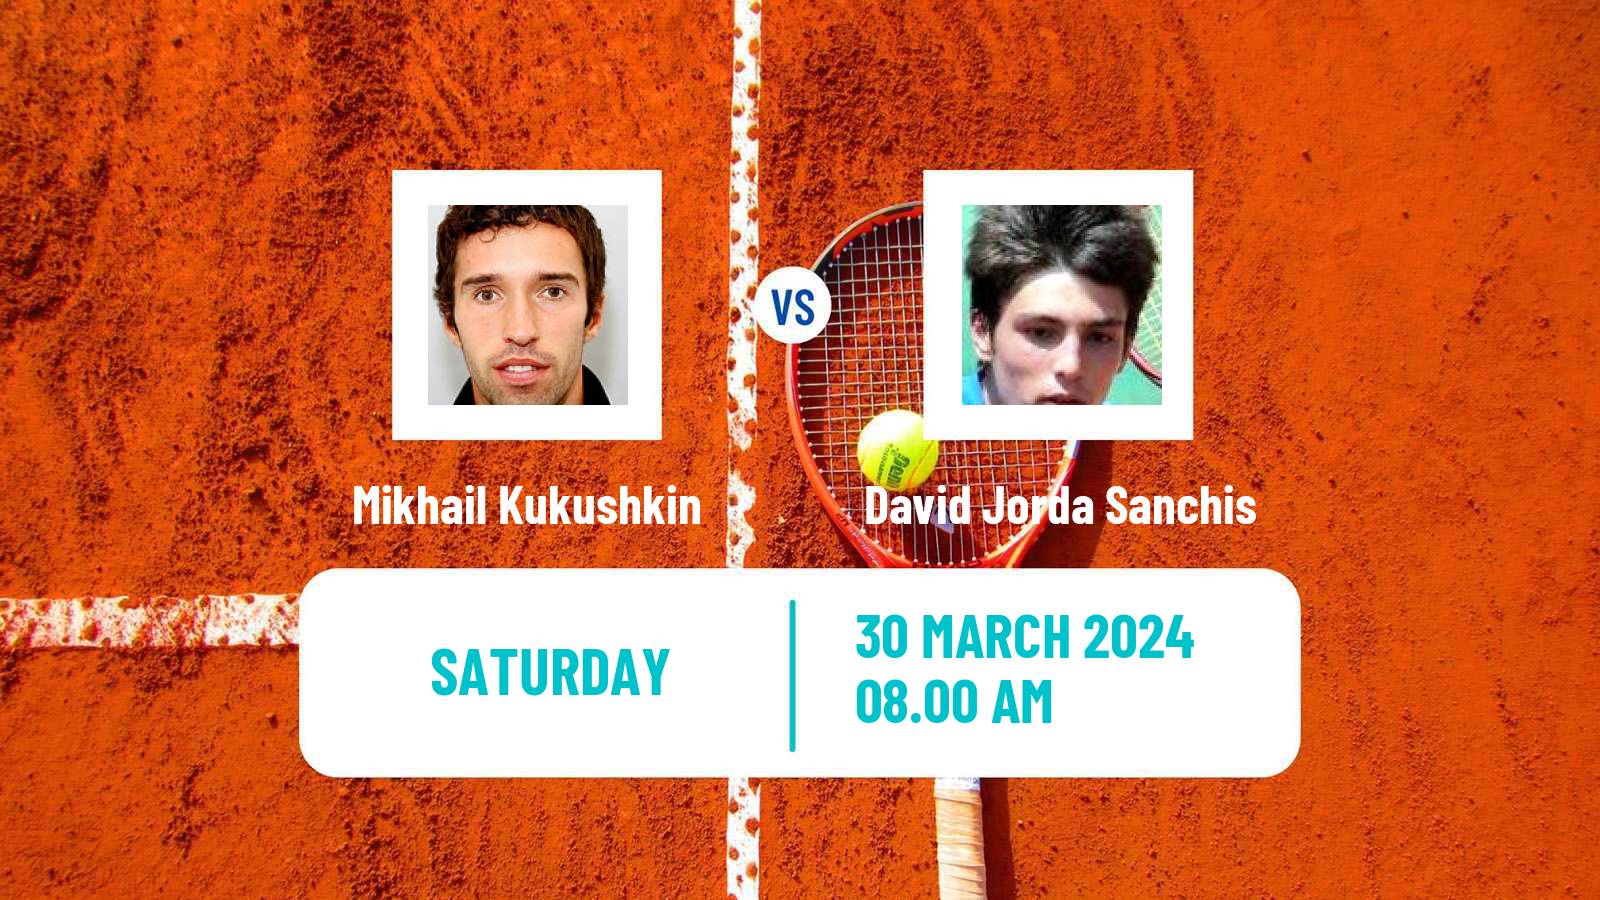 Tennis ATP Estoril Mikhail Kukushkin - David Jorda Sanchis